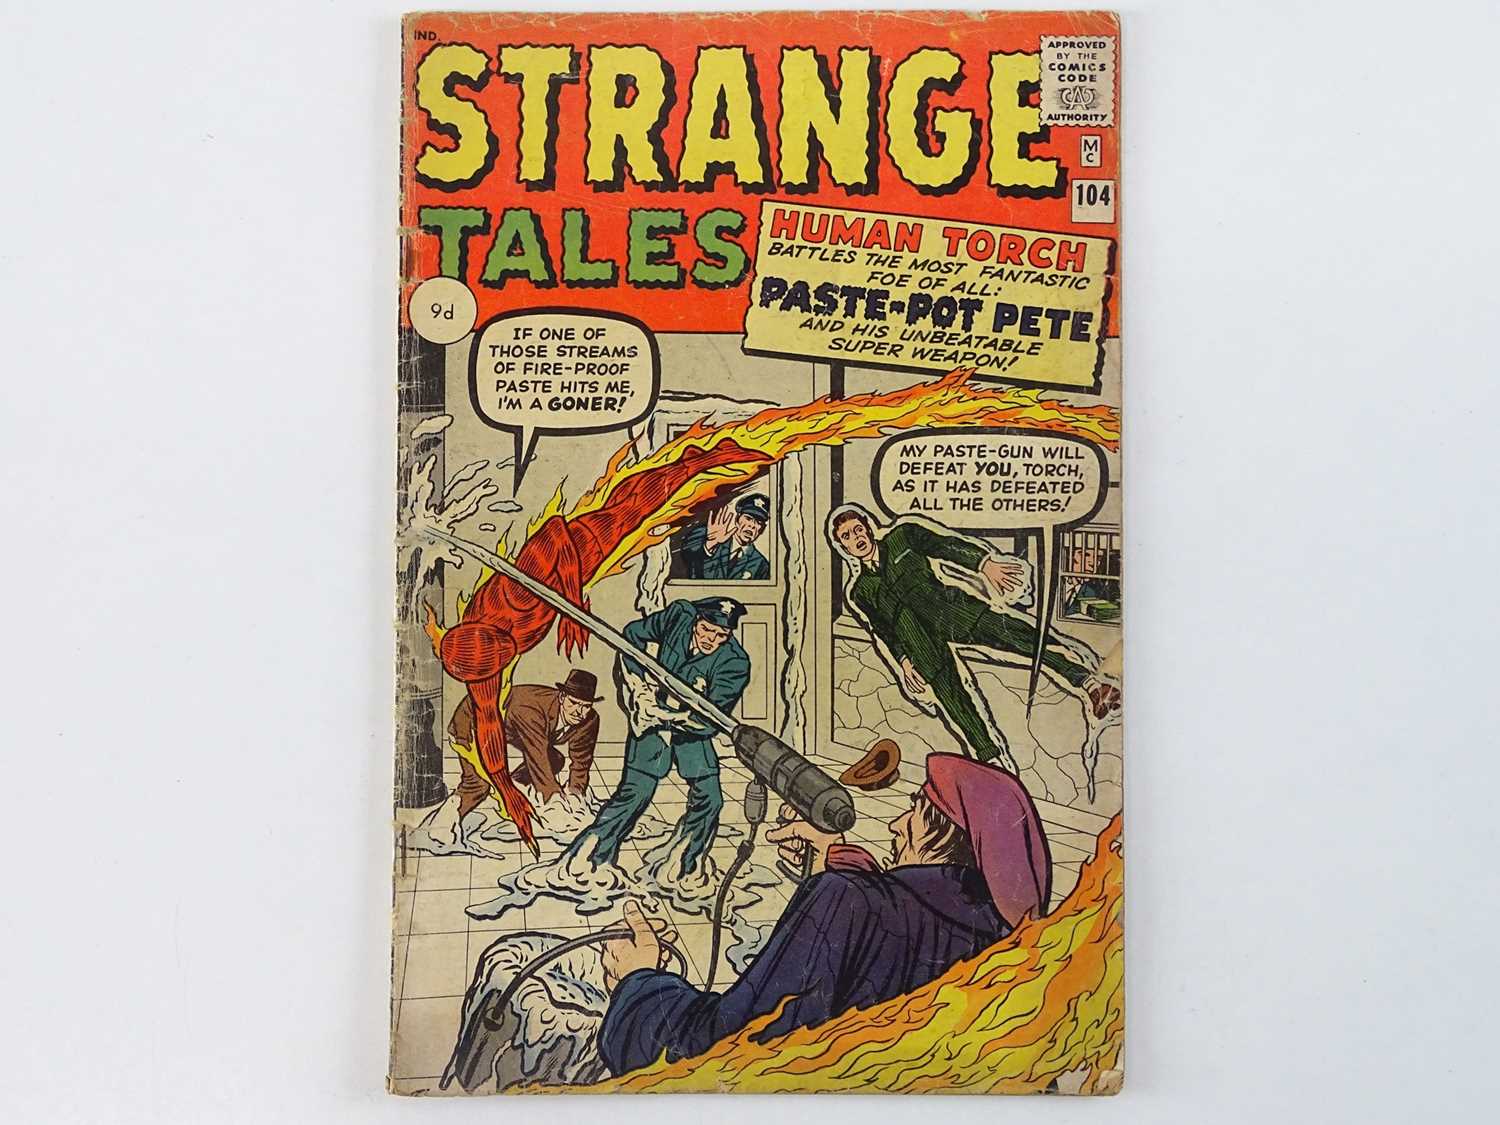 STRANGE TALES #104 - (1963 - MARVEL - UK Price Variant) - First appearance of Paste-Pot Pete (